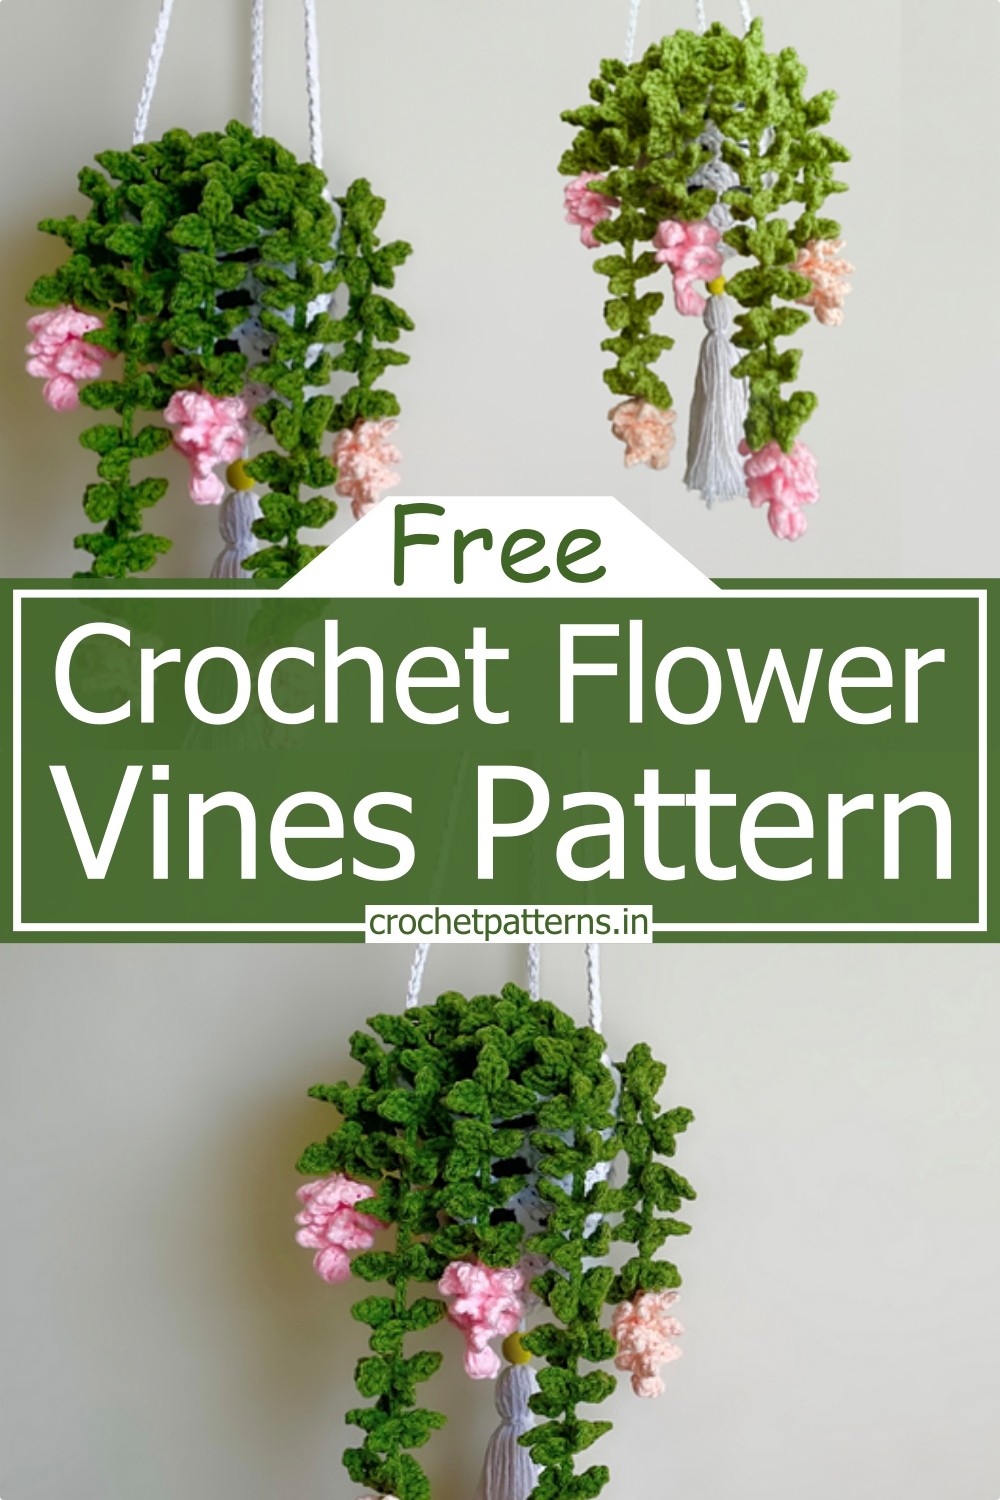 Crochet Flower Vines Pattern